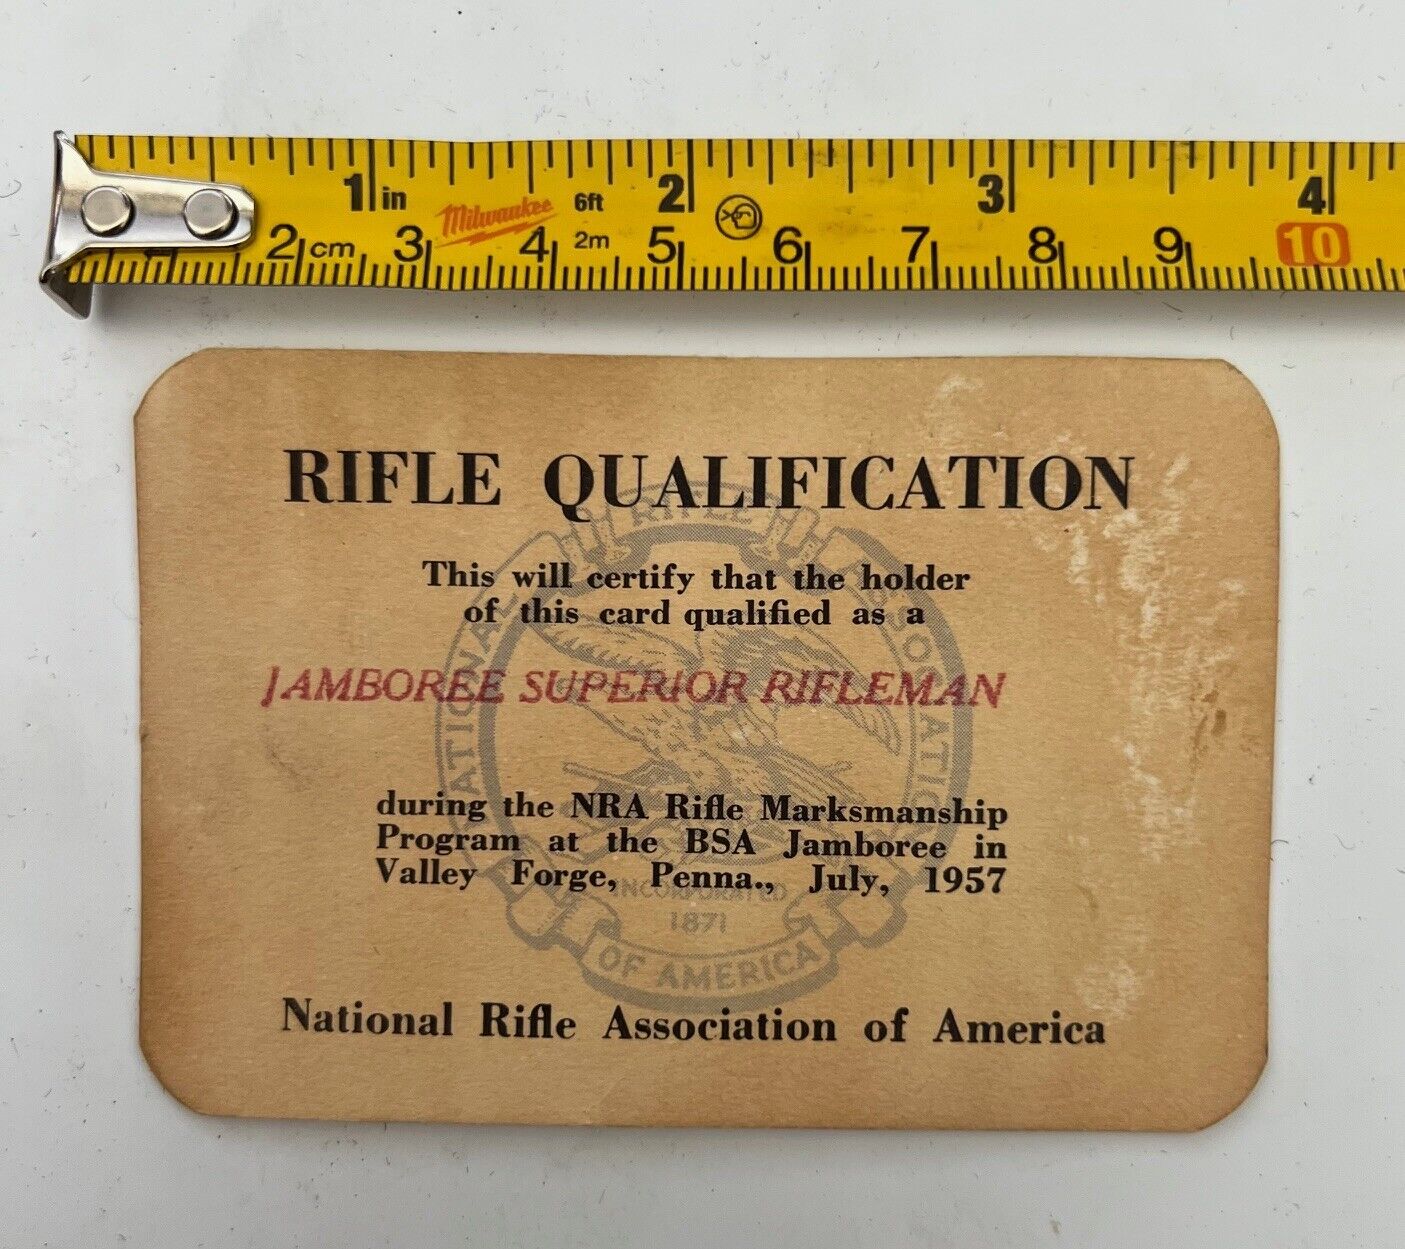 Boy Scouts BSA 1957 Rifle Qualification Jamboree superior rifleman card